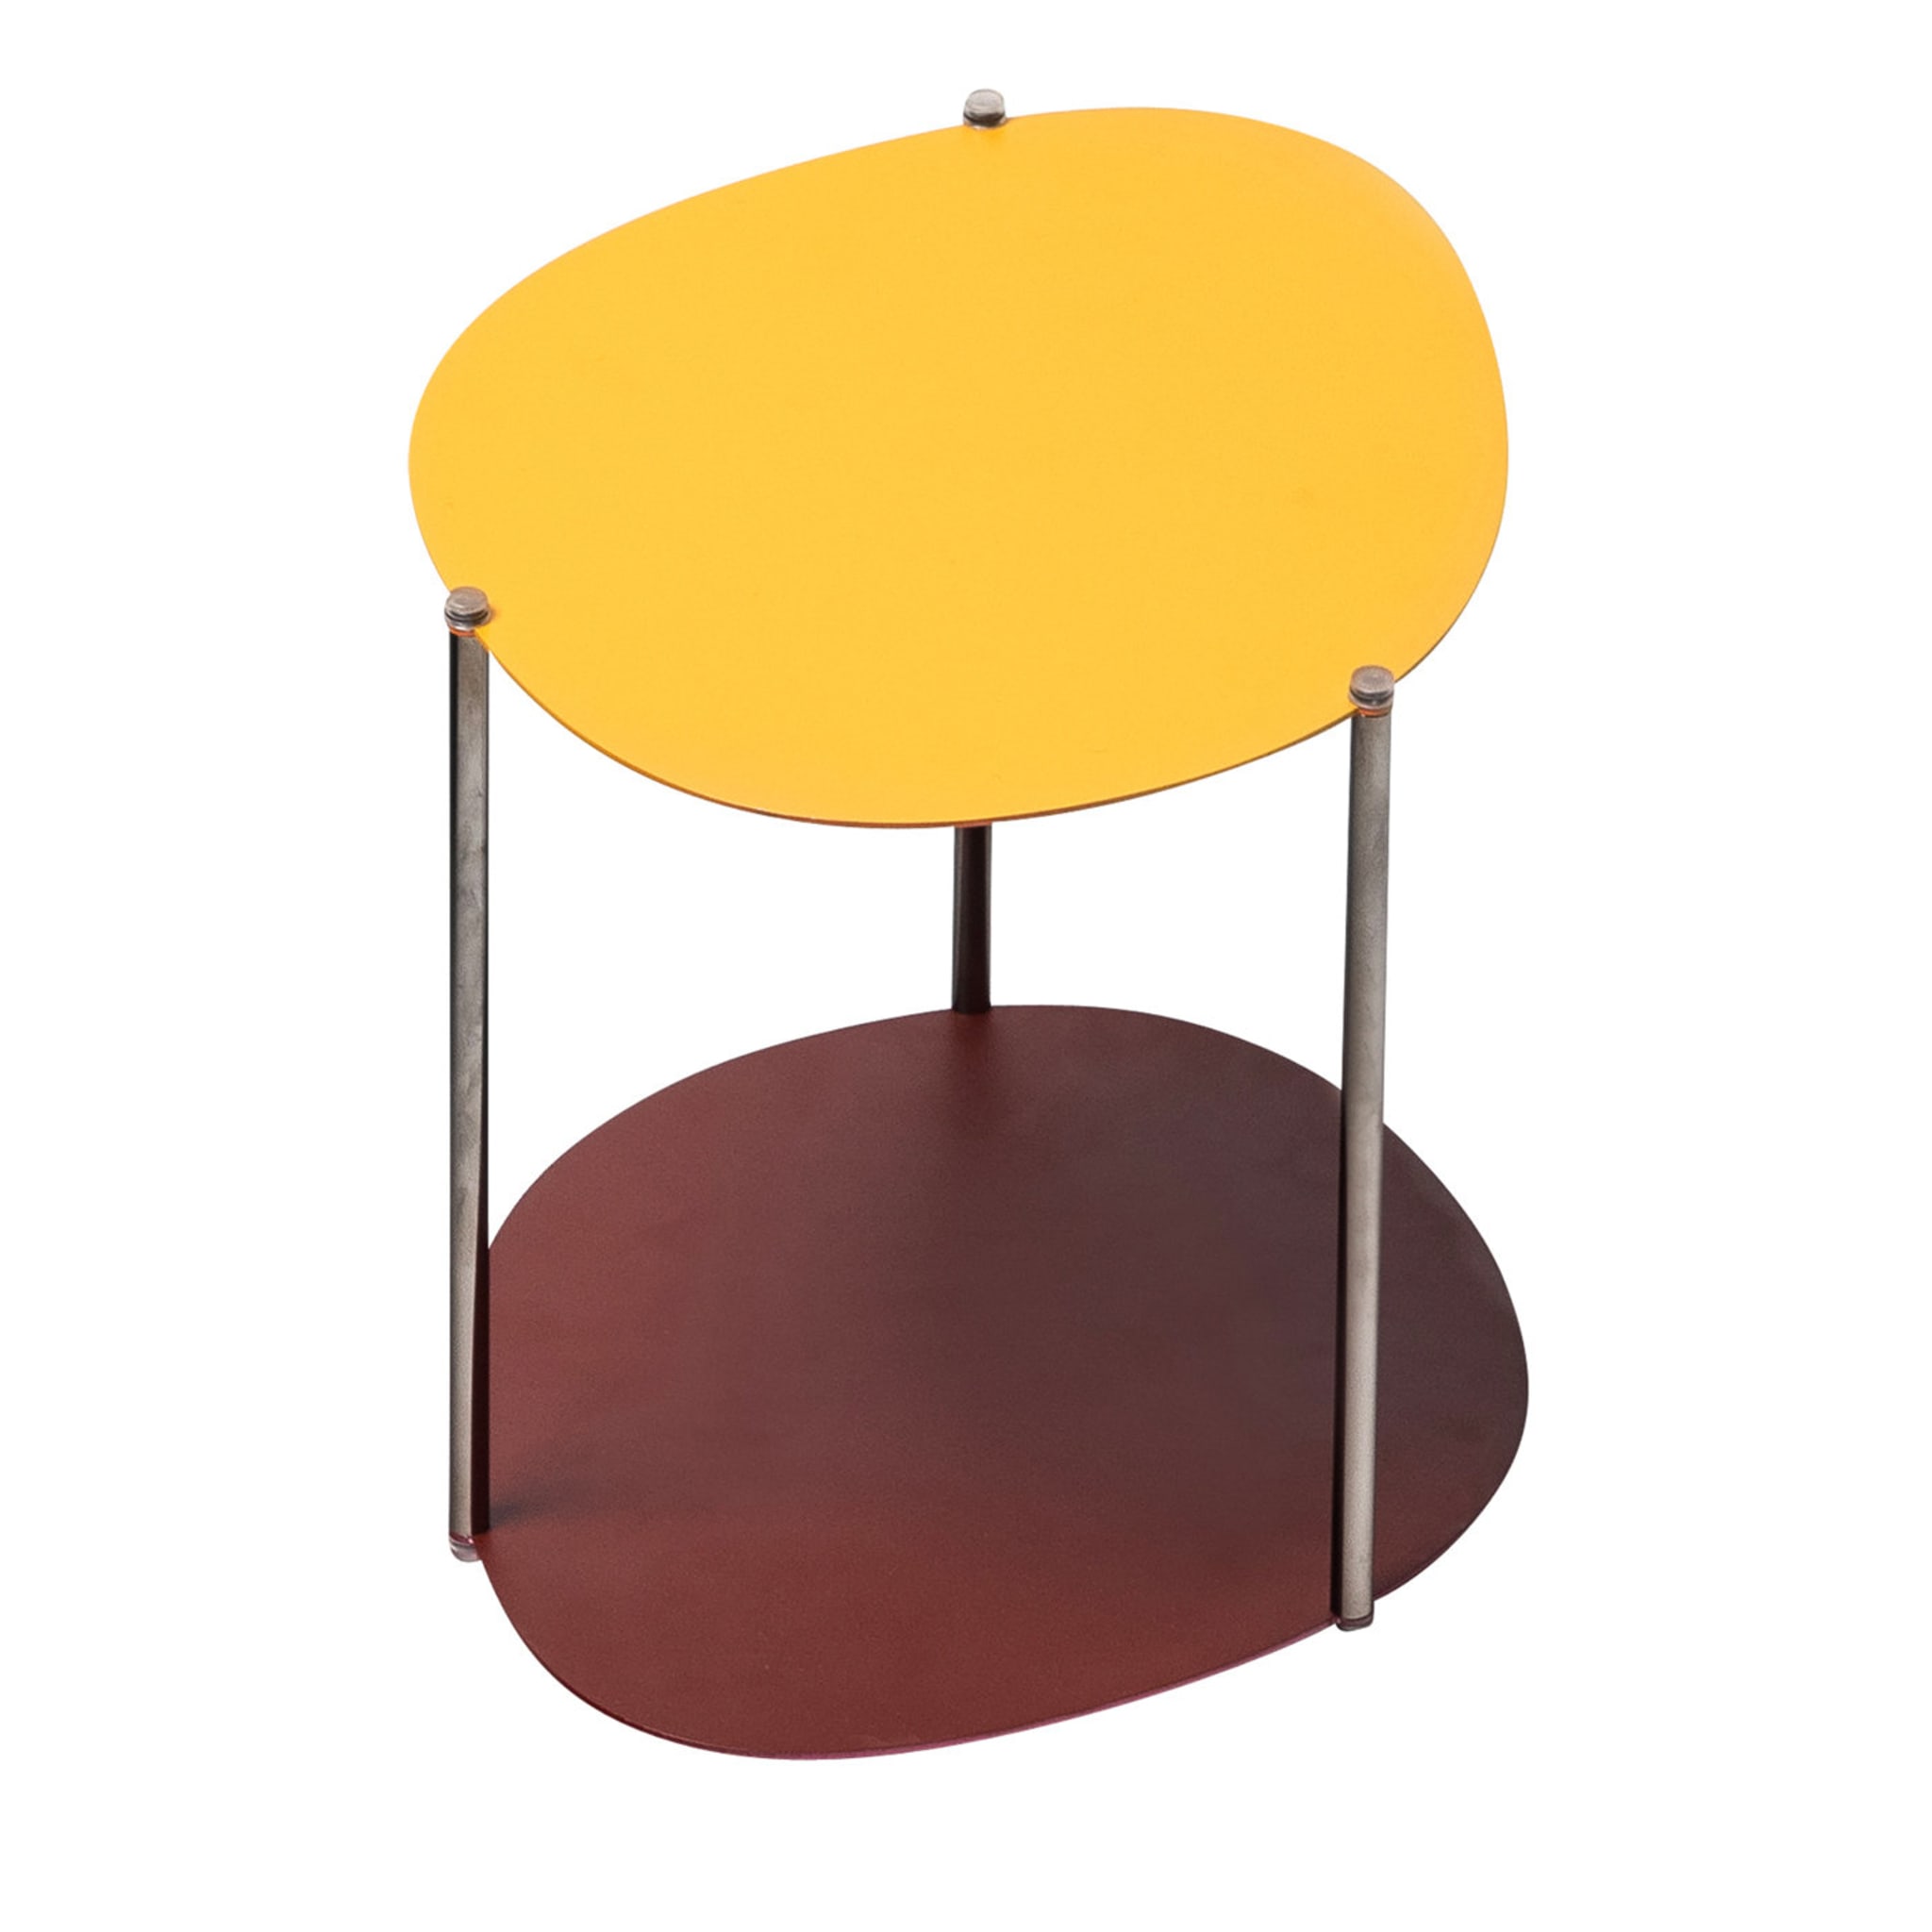 Picos Small Yellow/Purple Side Table by Claesson Koivisto Rune - Main view